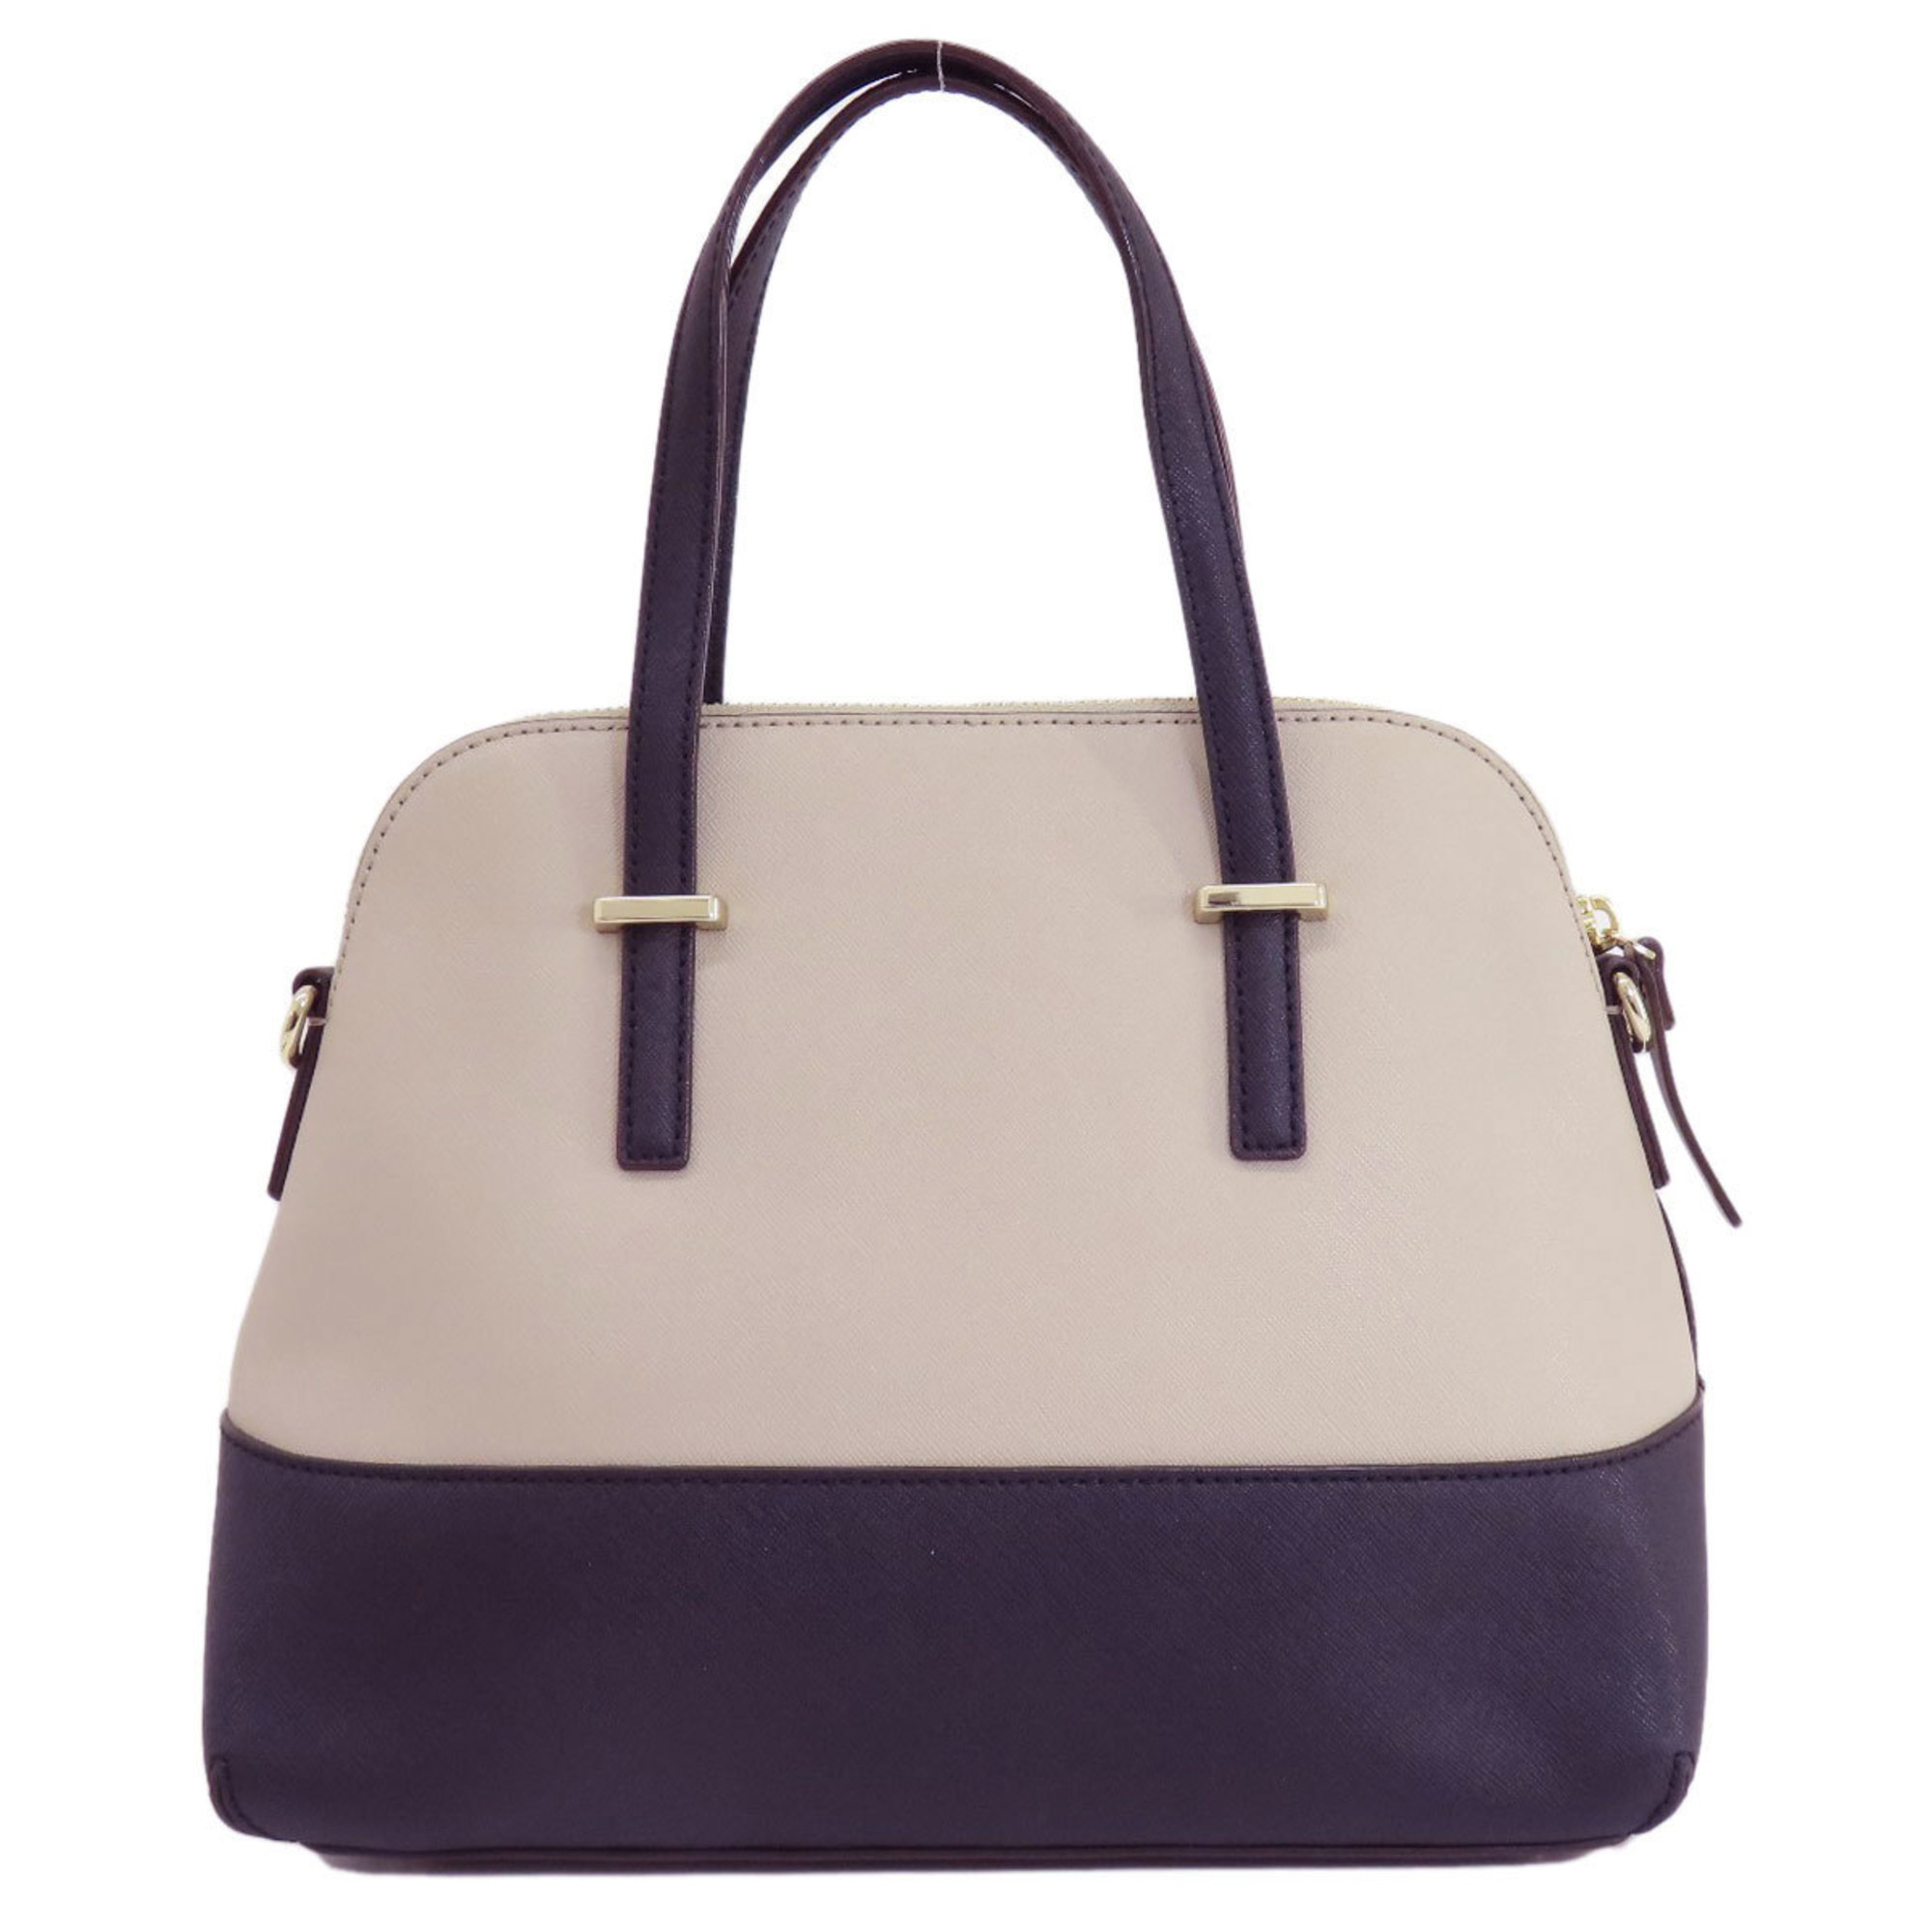 Kate Spade handbags for women